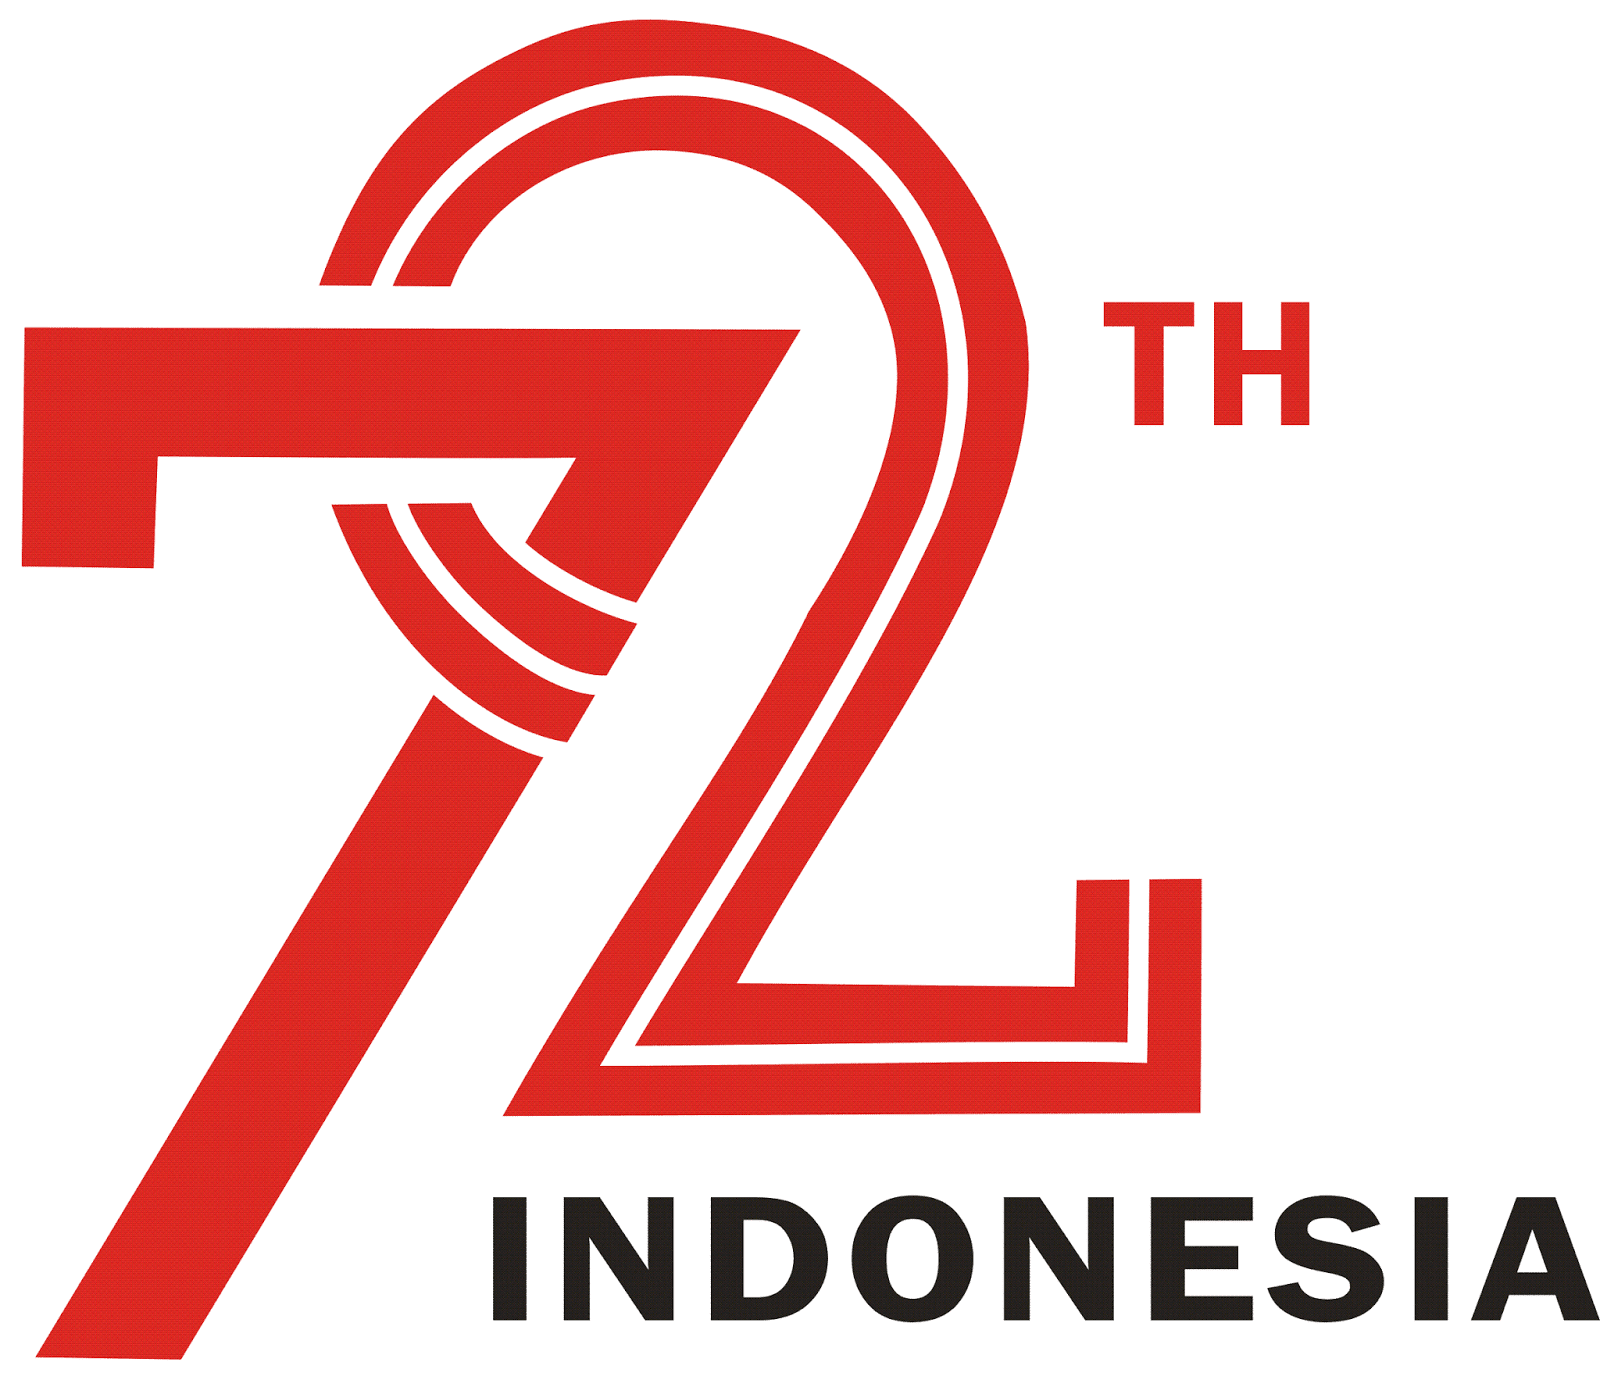 Логотип 17. Seventeen logo PNG. Puynkang Yul лого. 17 PNG.